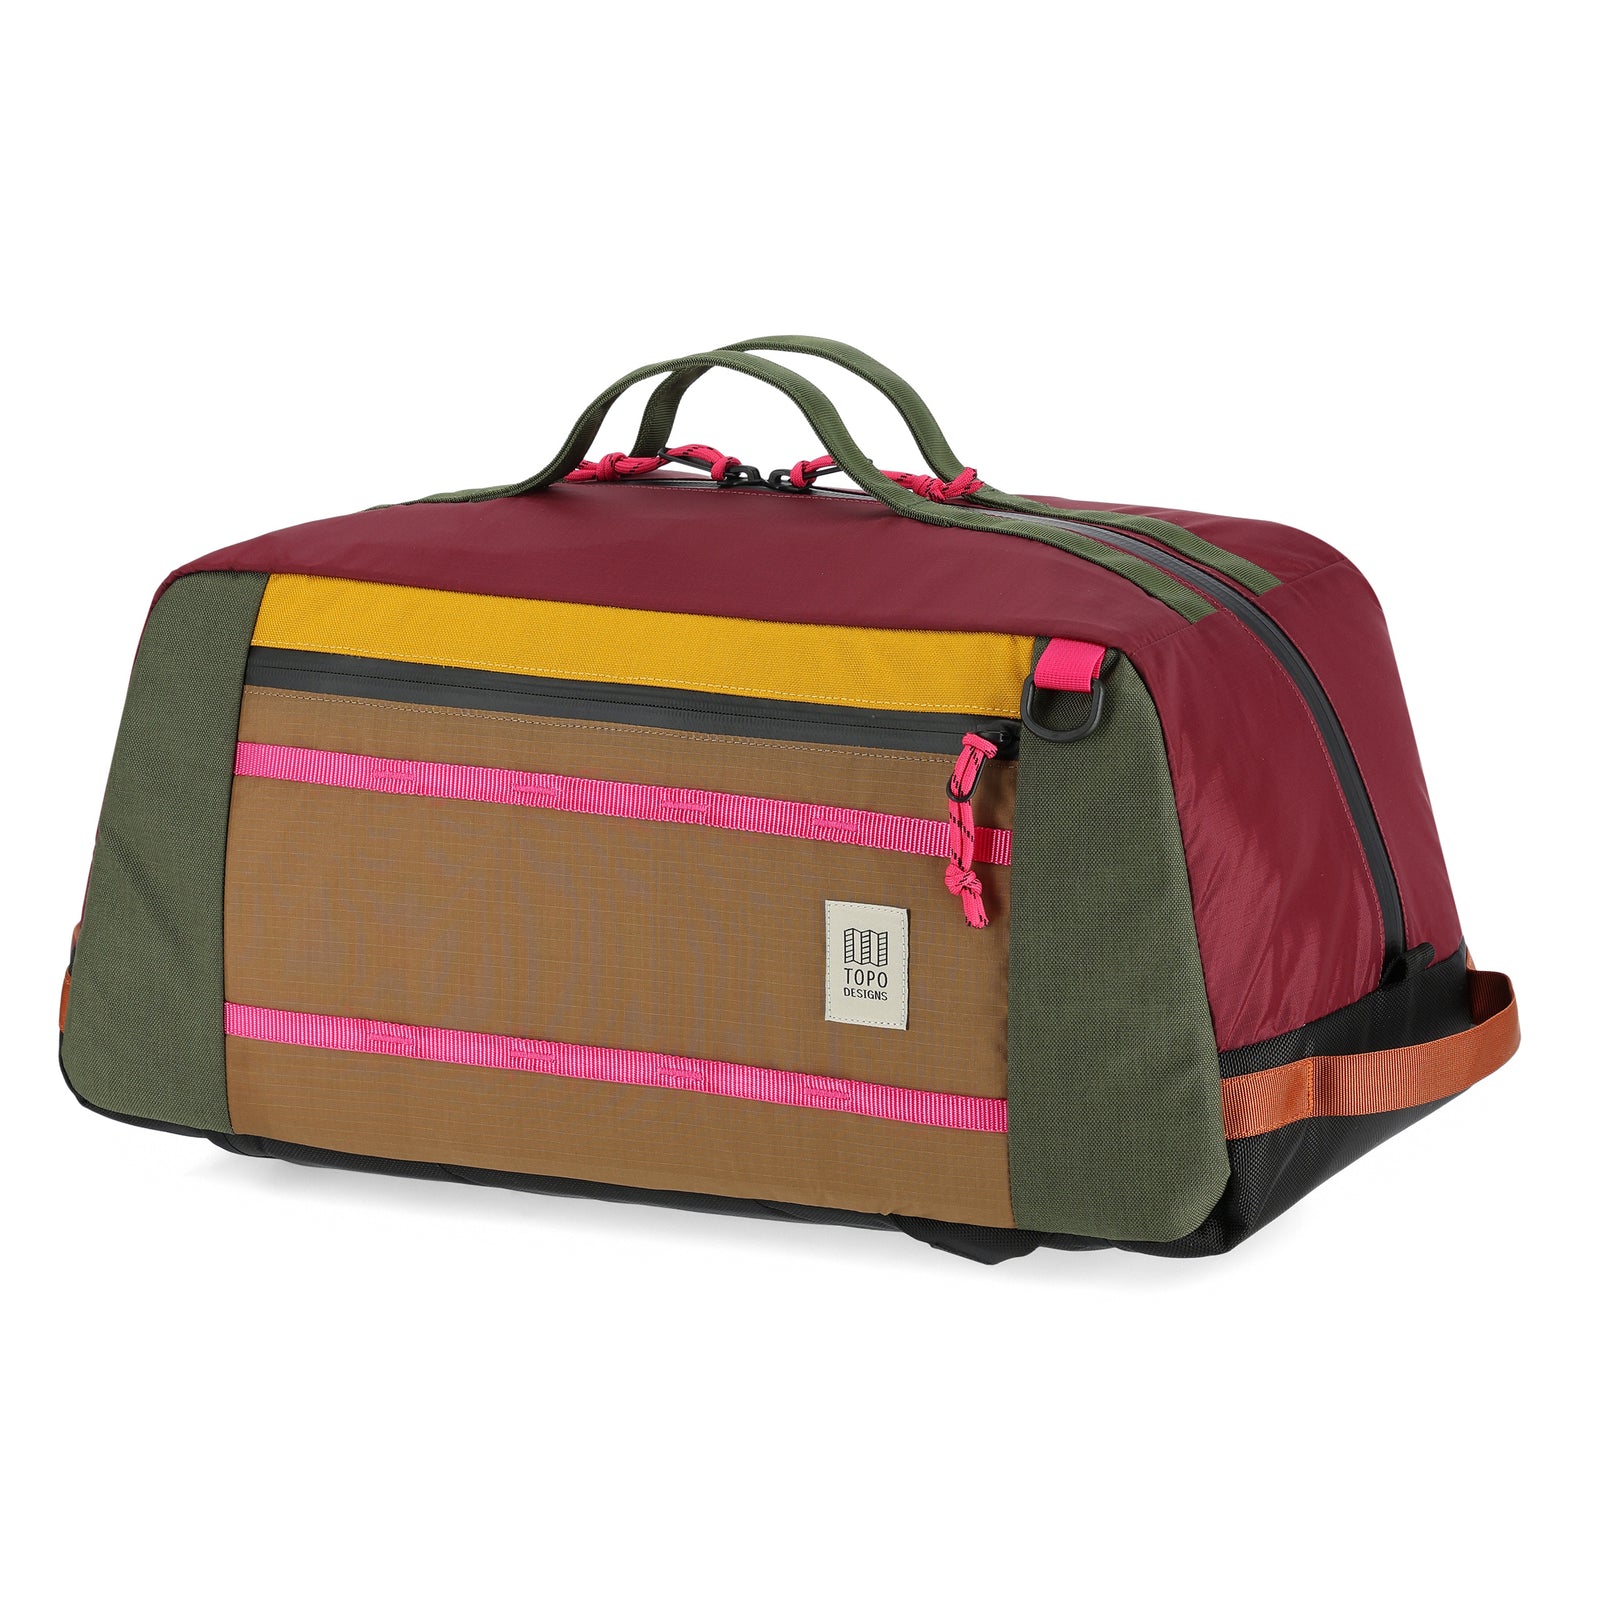 Topo Designs Mountain Duffel 40L backpack gear bag in recycled "Burgundy / Dark Khaki" nylon.